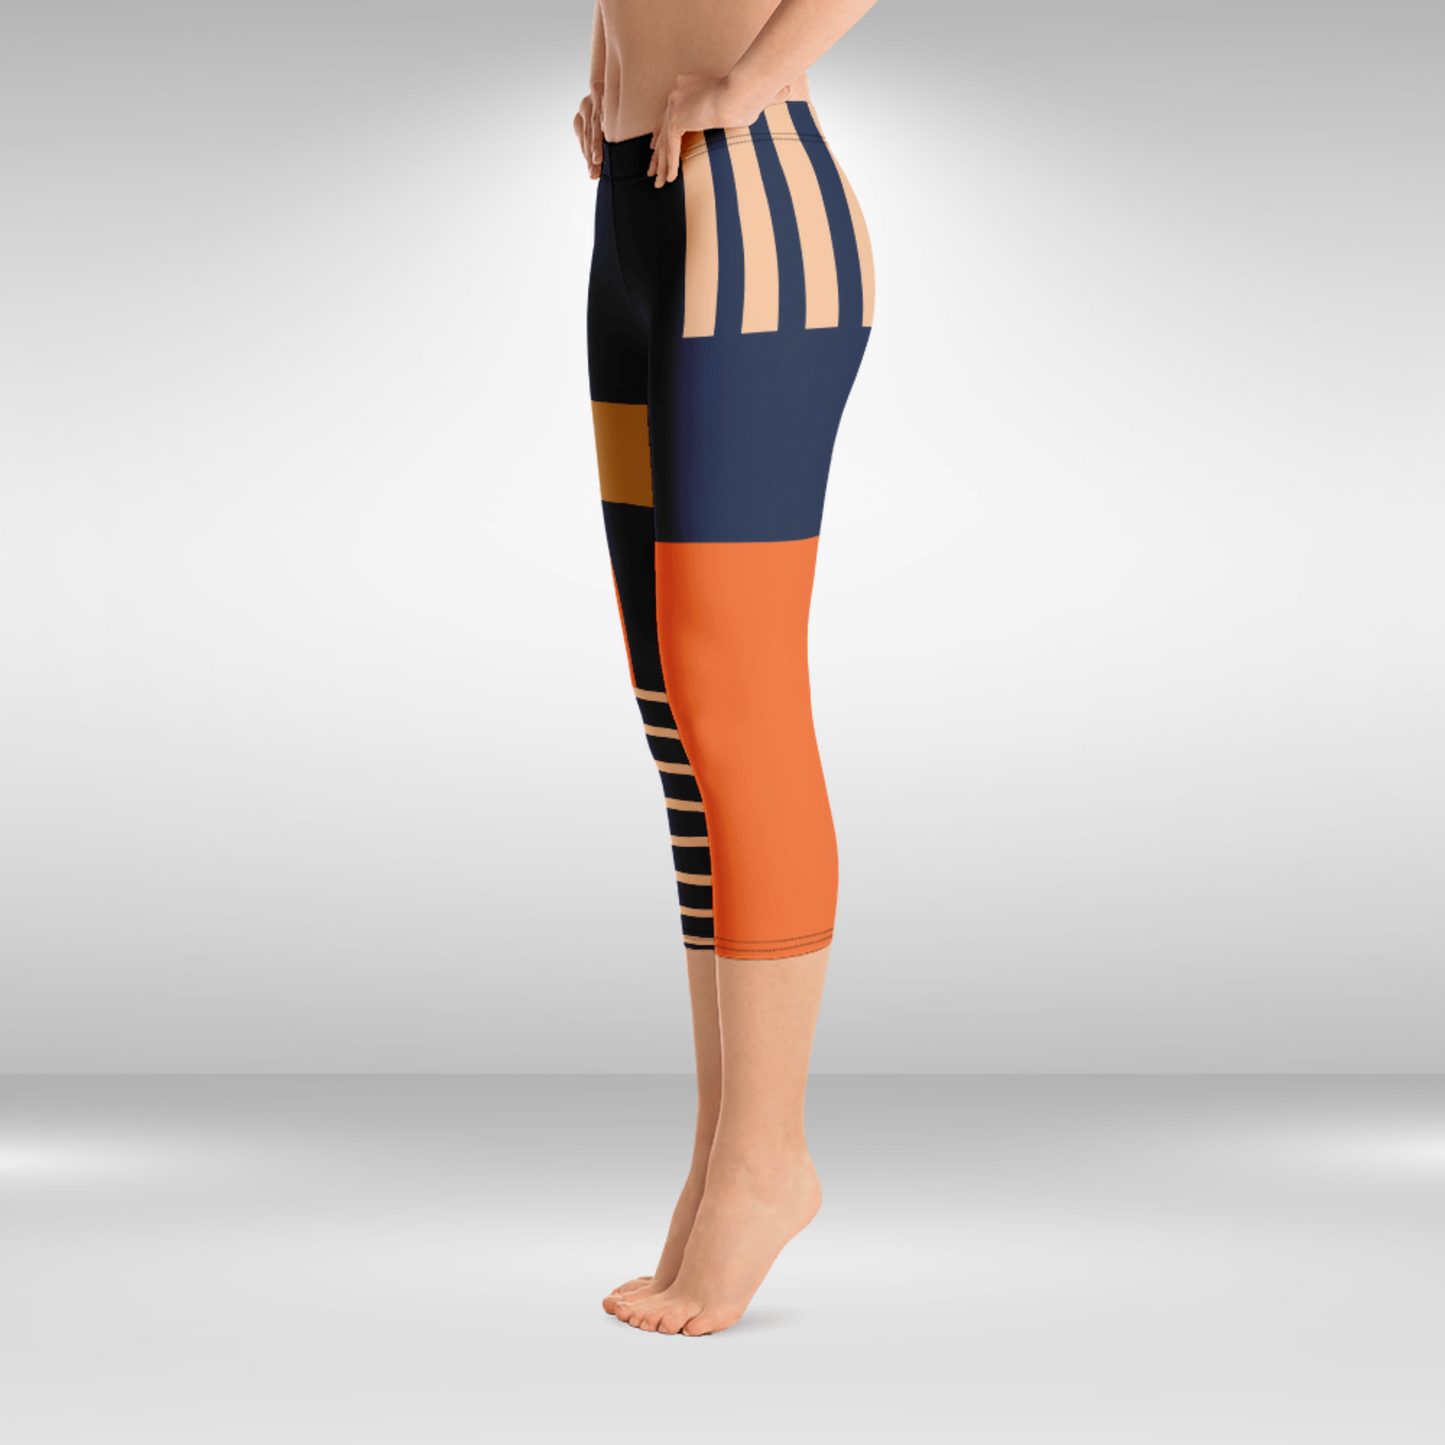 Women Gym Capri Legging - Blue and Orange Abstract Print